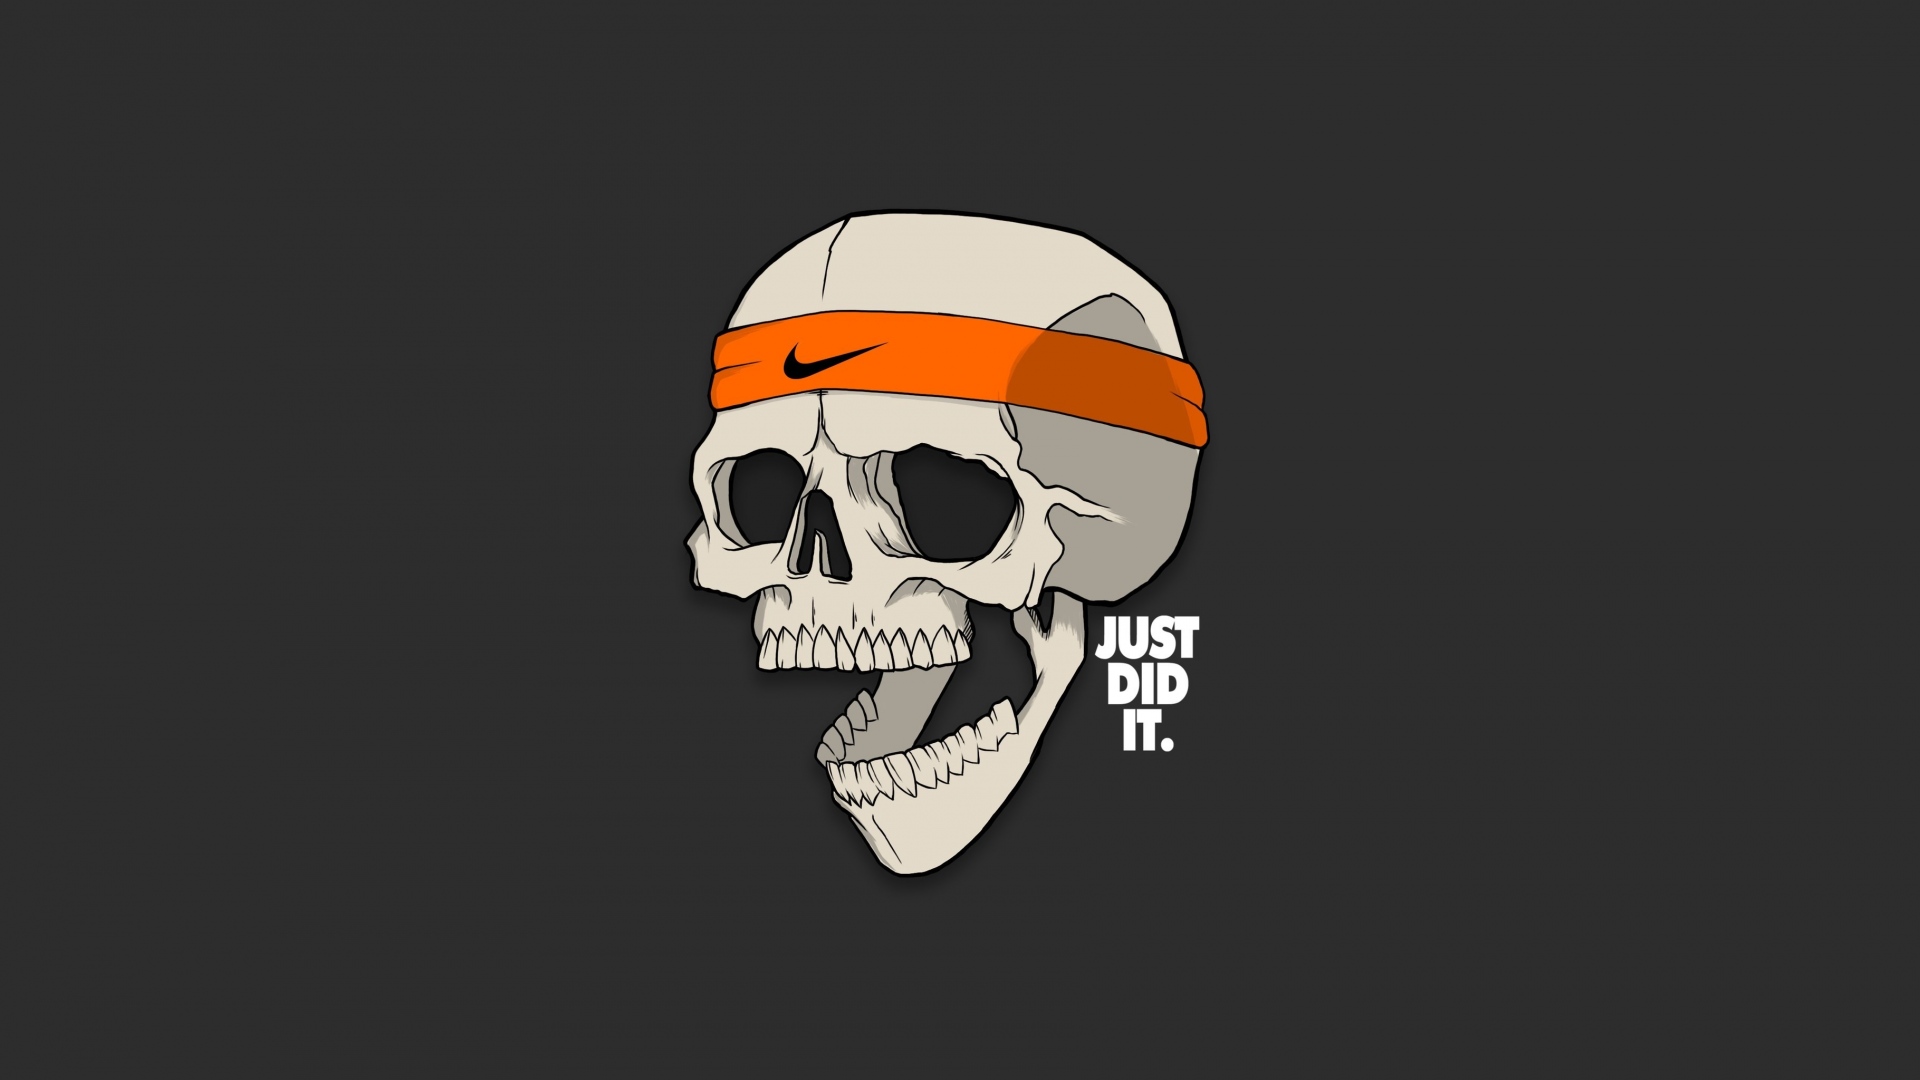 General 1920x1080 digital art skull simple background Nike humor open mouth headband Just Do It. gray background dead dark gray dark humor